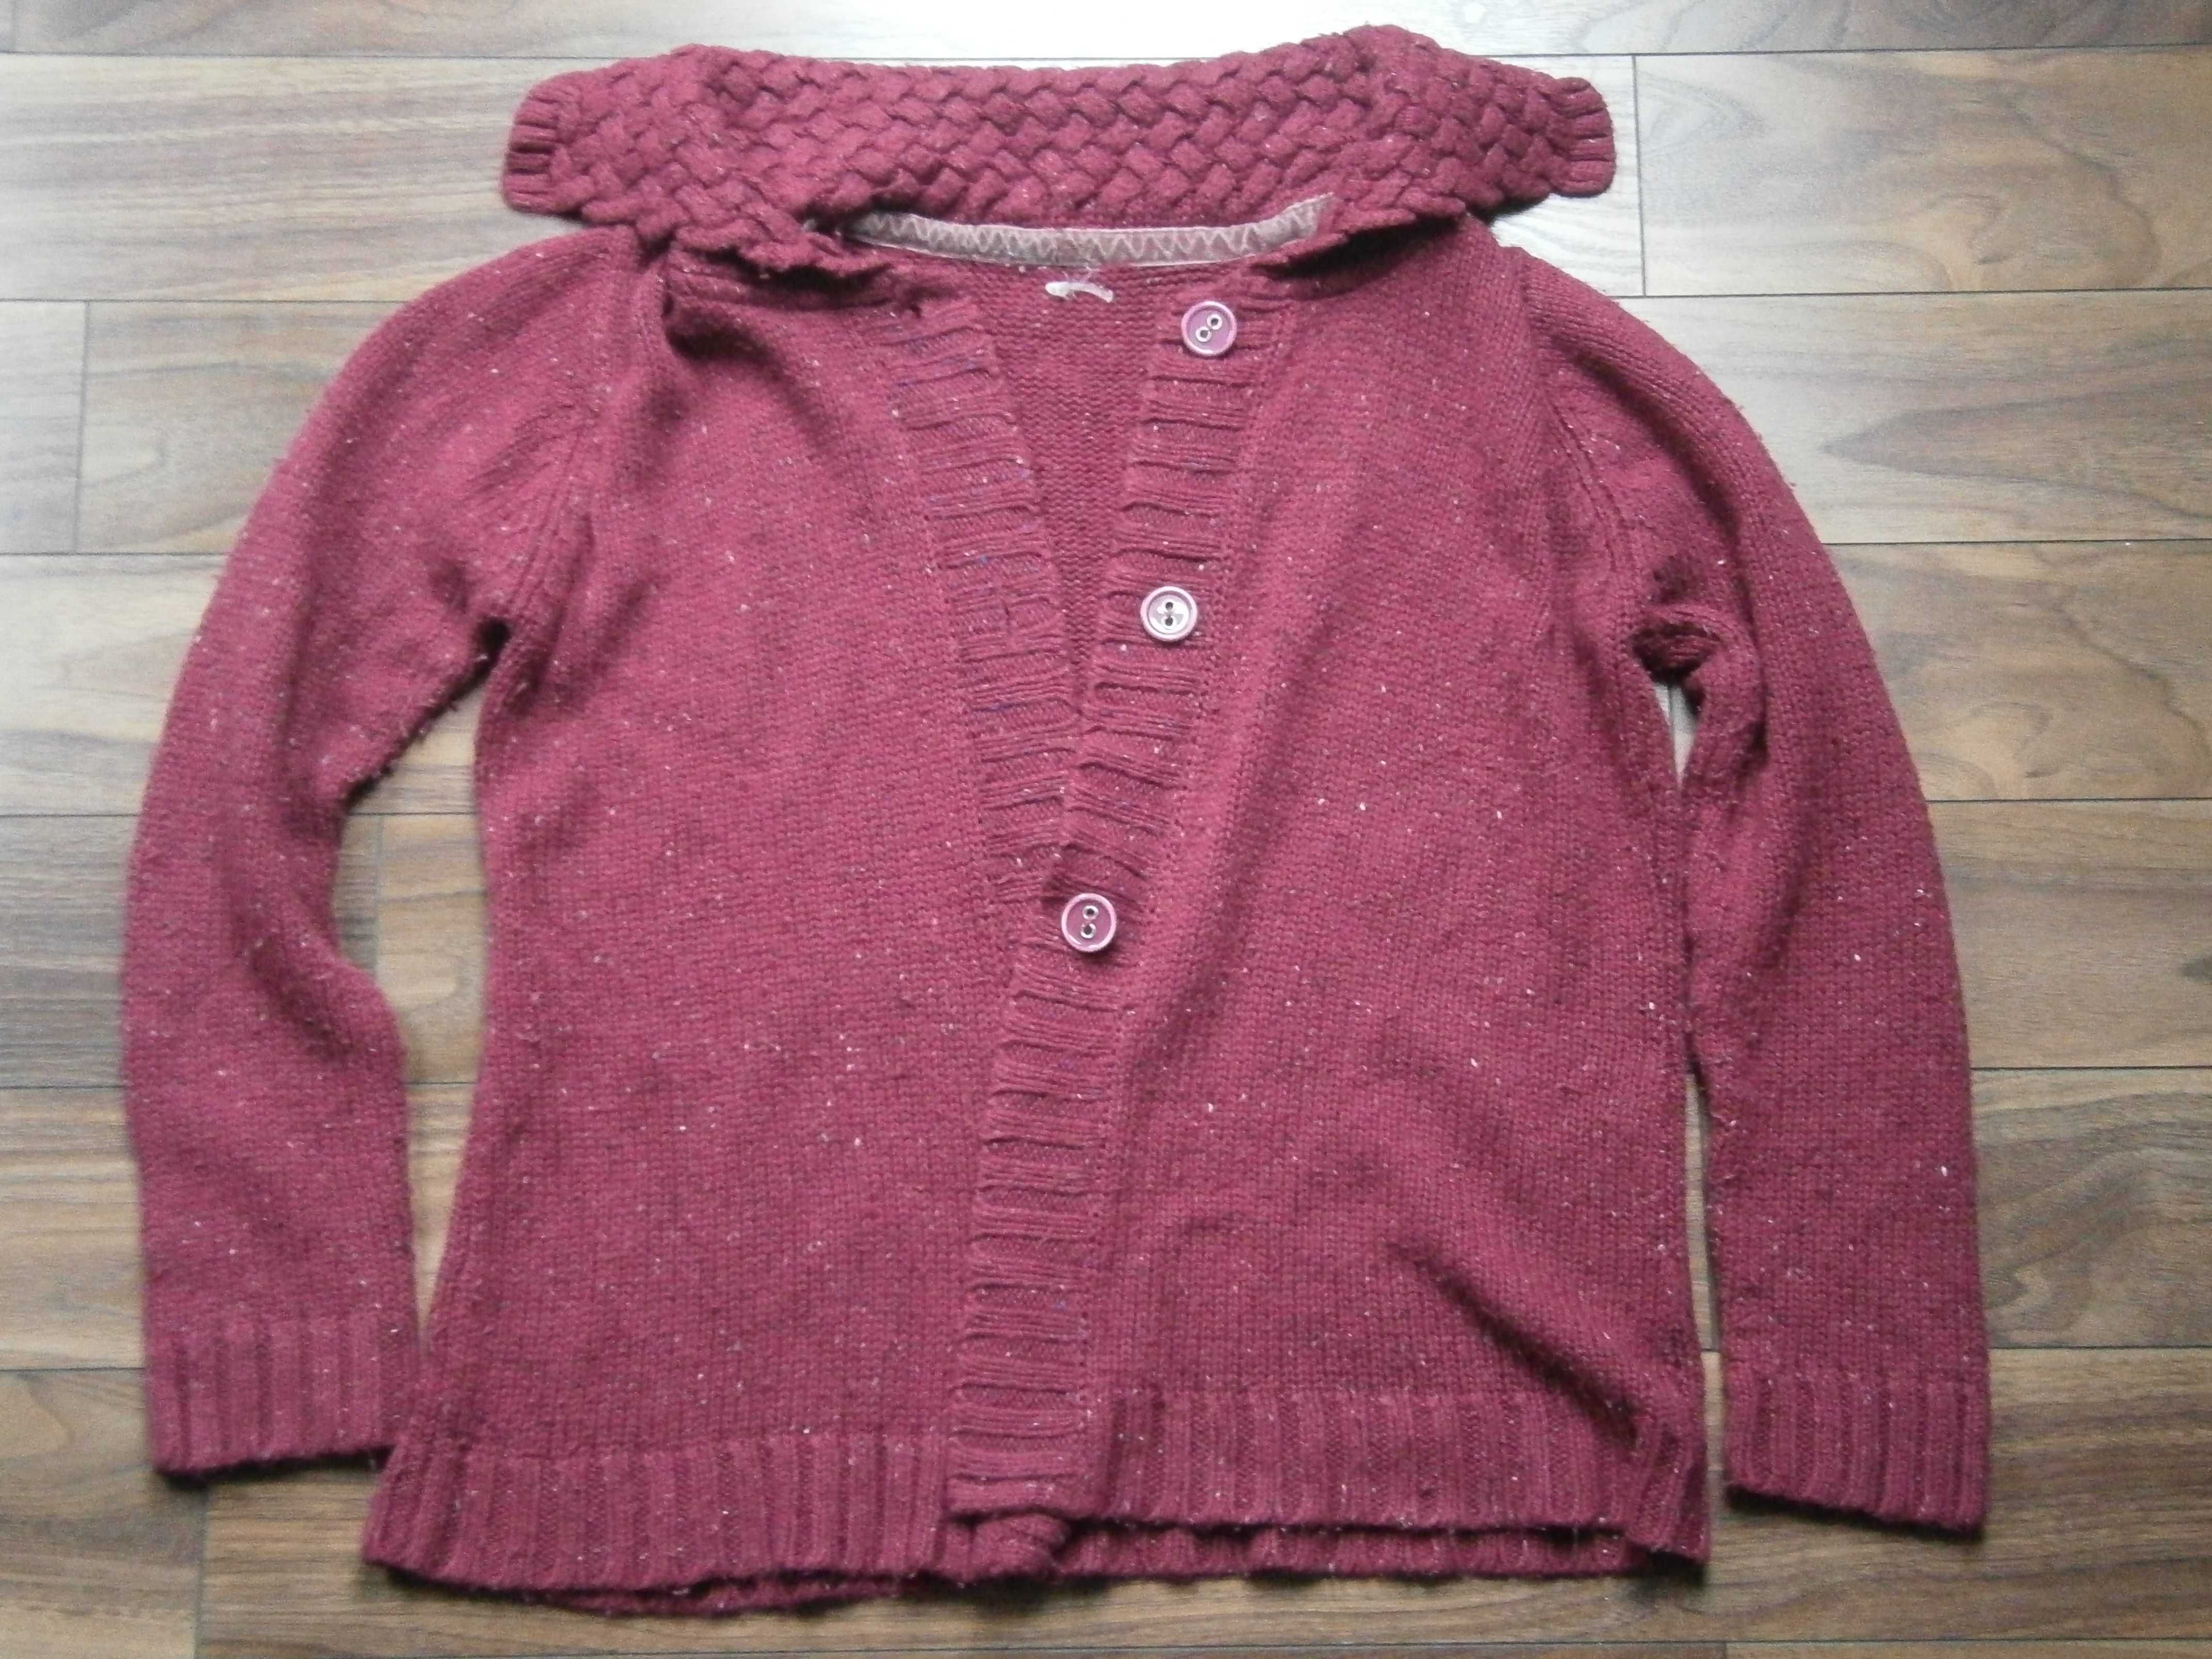 Sweterek M L purpurowy zapinany na guziki sweter